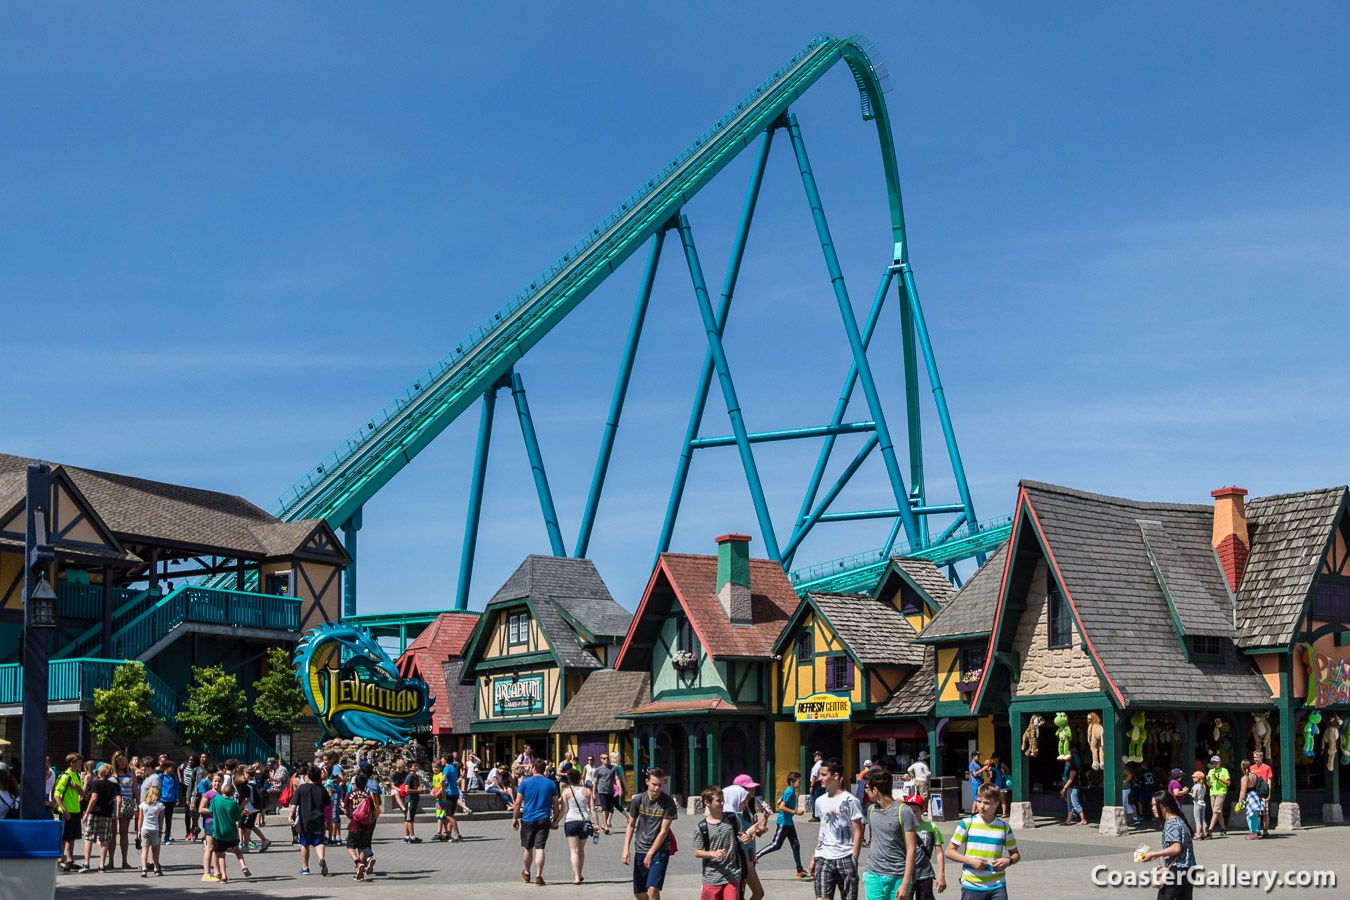 Leviathan roller coaster at Canada's Wonderland